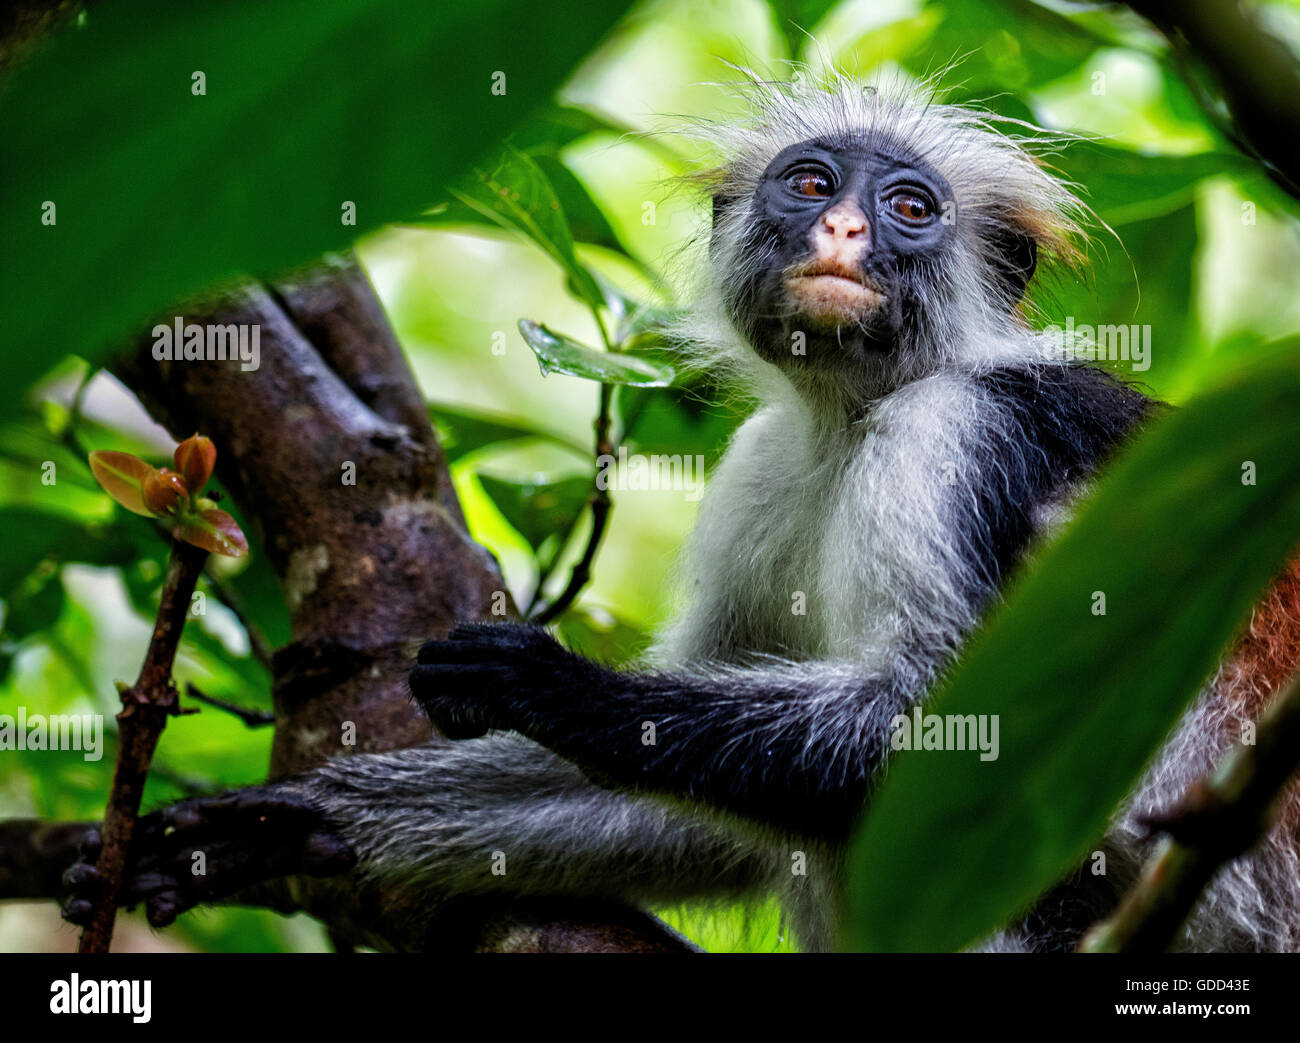 Red colobus monkey Procolobus kirkii at Jozani forest on the island of Zanzibar East Africa Stock Photo